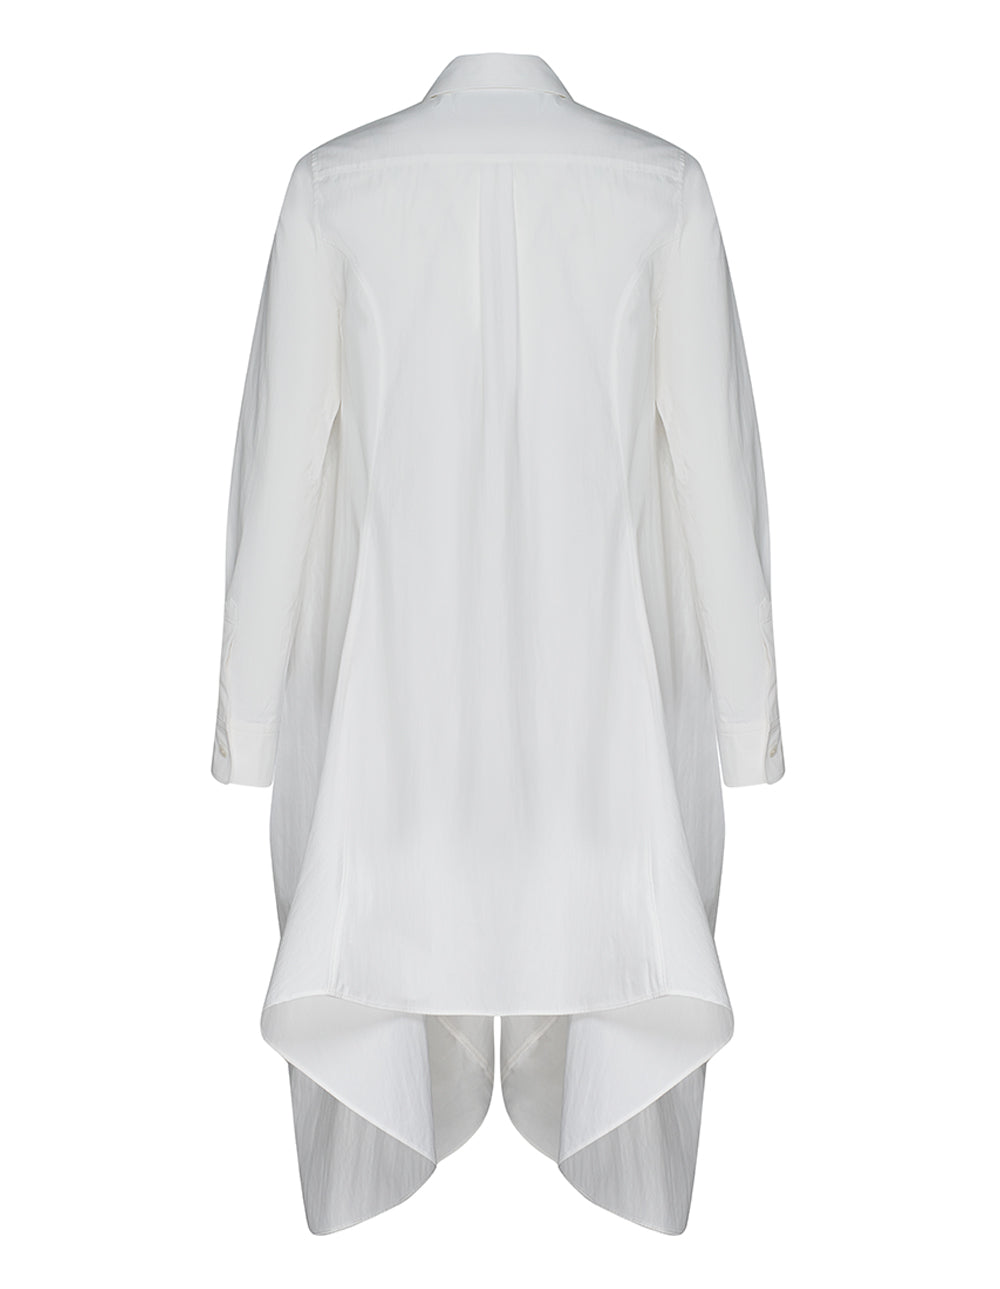 Club21 Collection Cotton Nylon Shirt Dress (White)